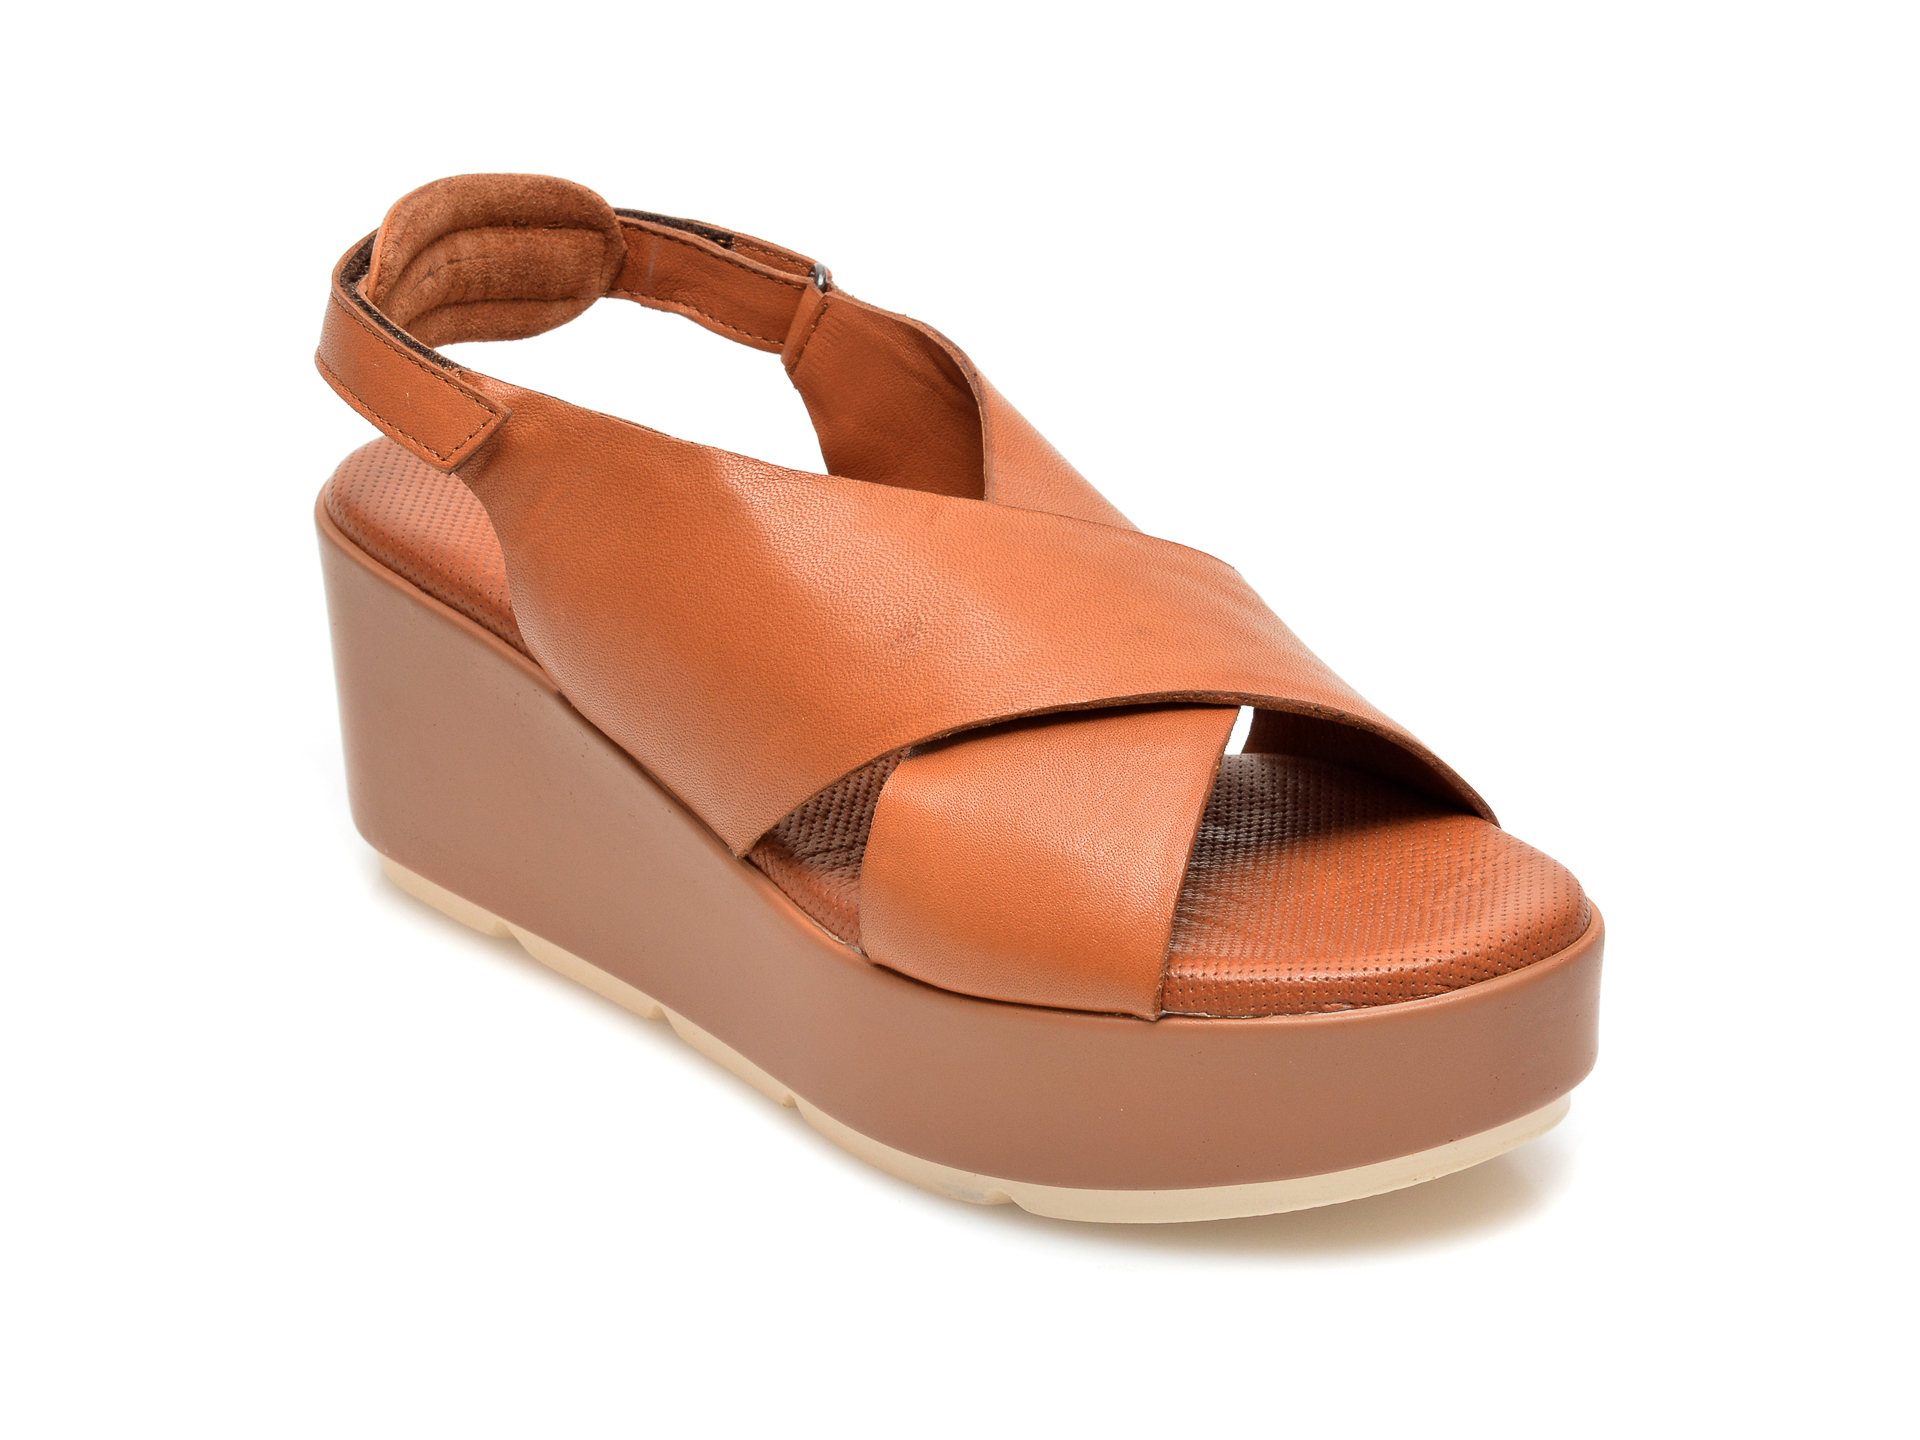 Sandale BABOOS maro, 2520, din piele naturala Baboos